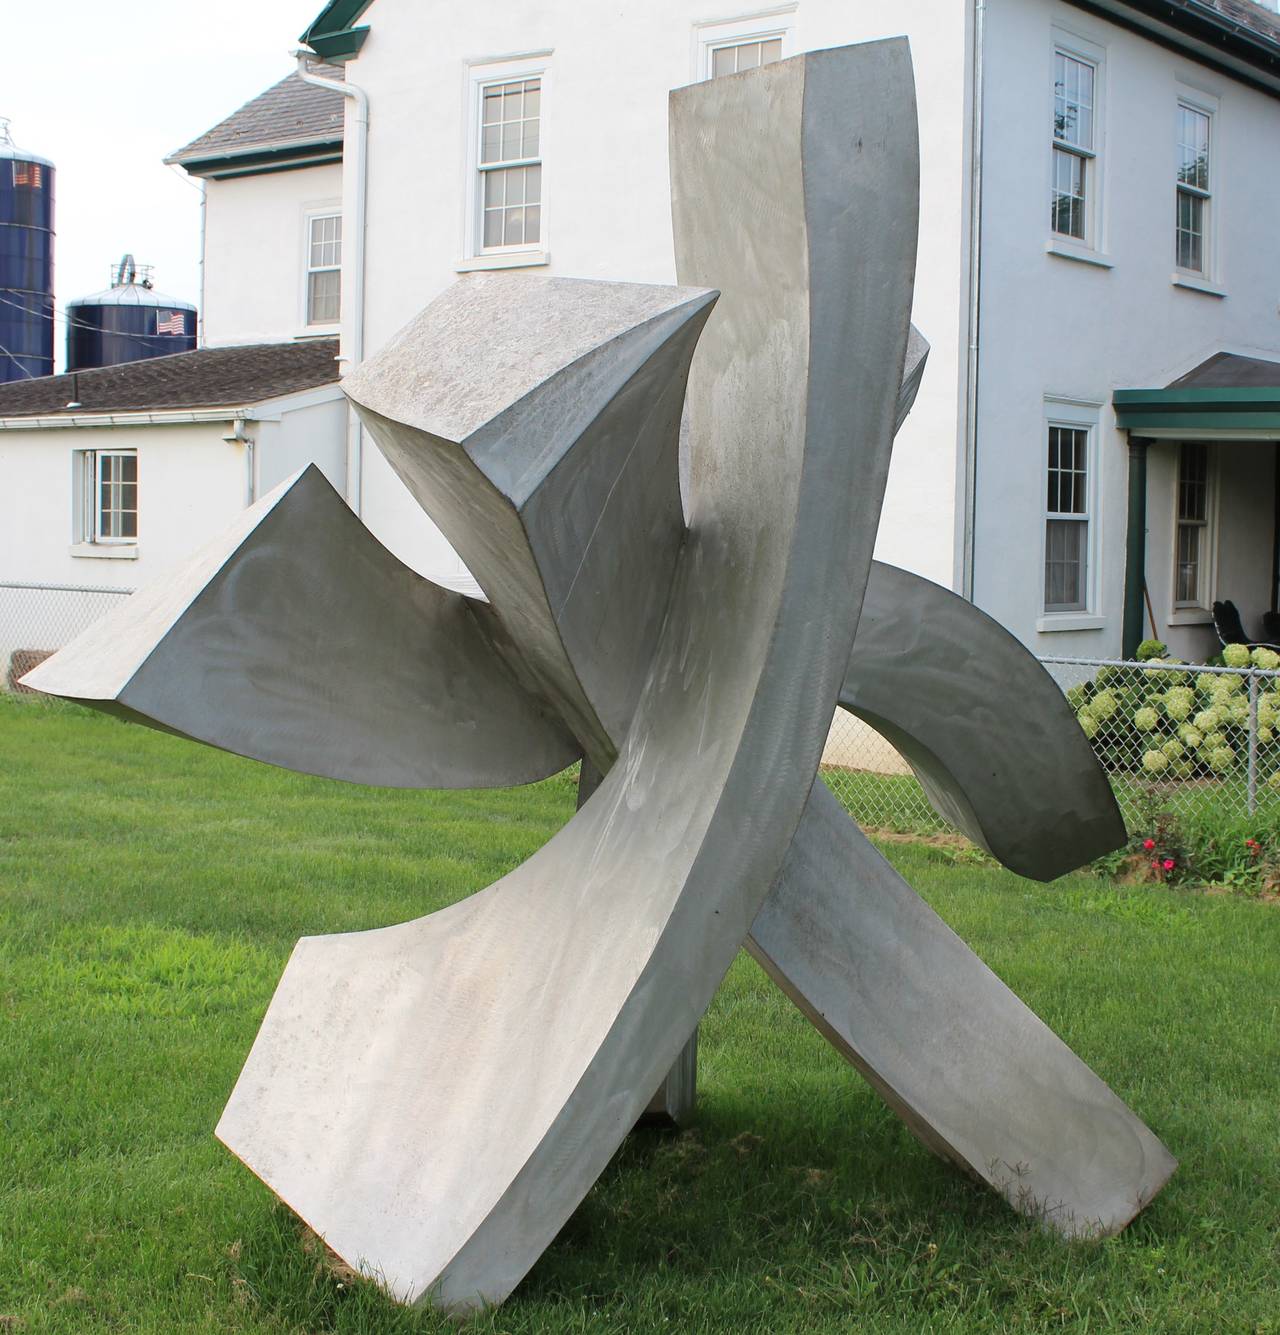 Brushed Monumental Outdoor Garden Sculpture by Jon Krawczyk, 1998